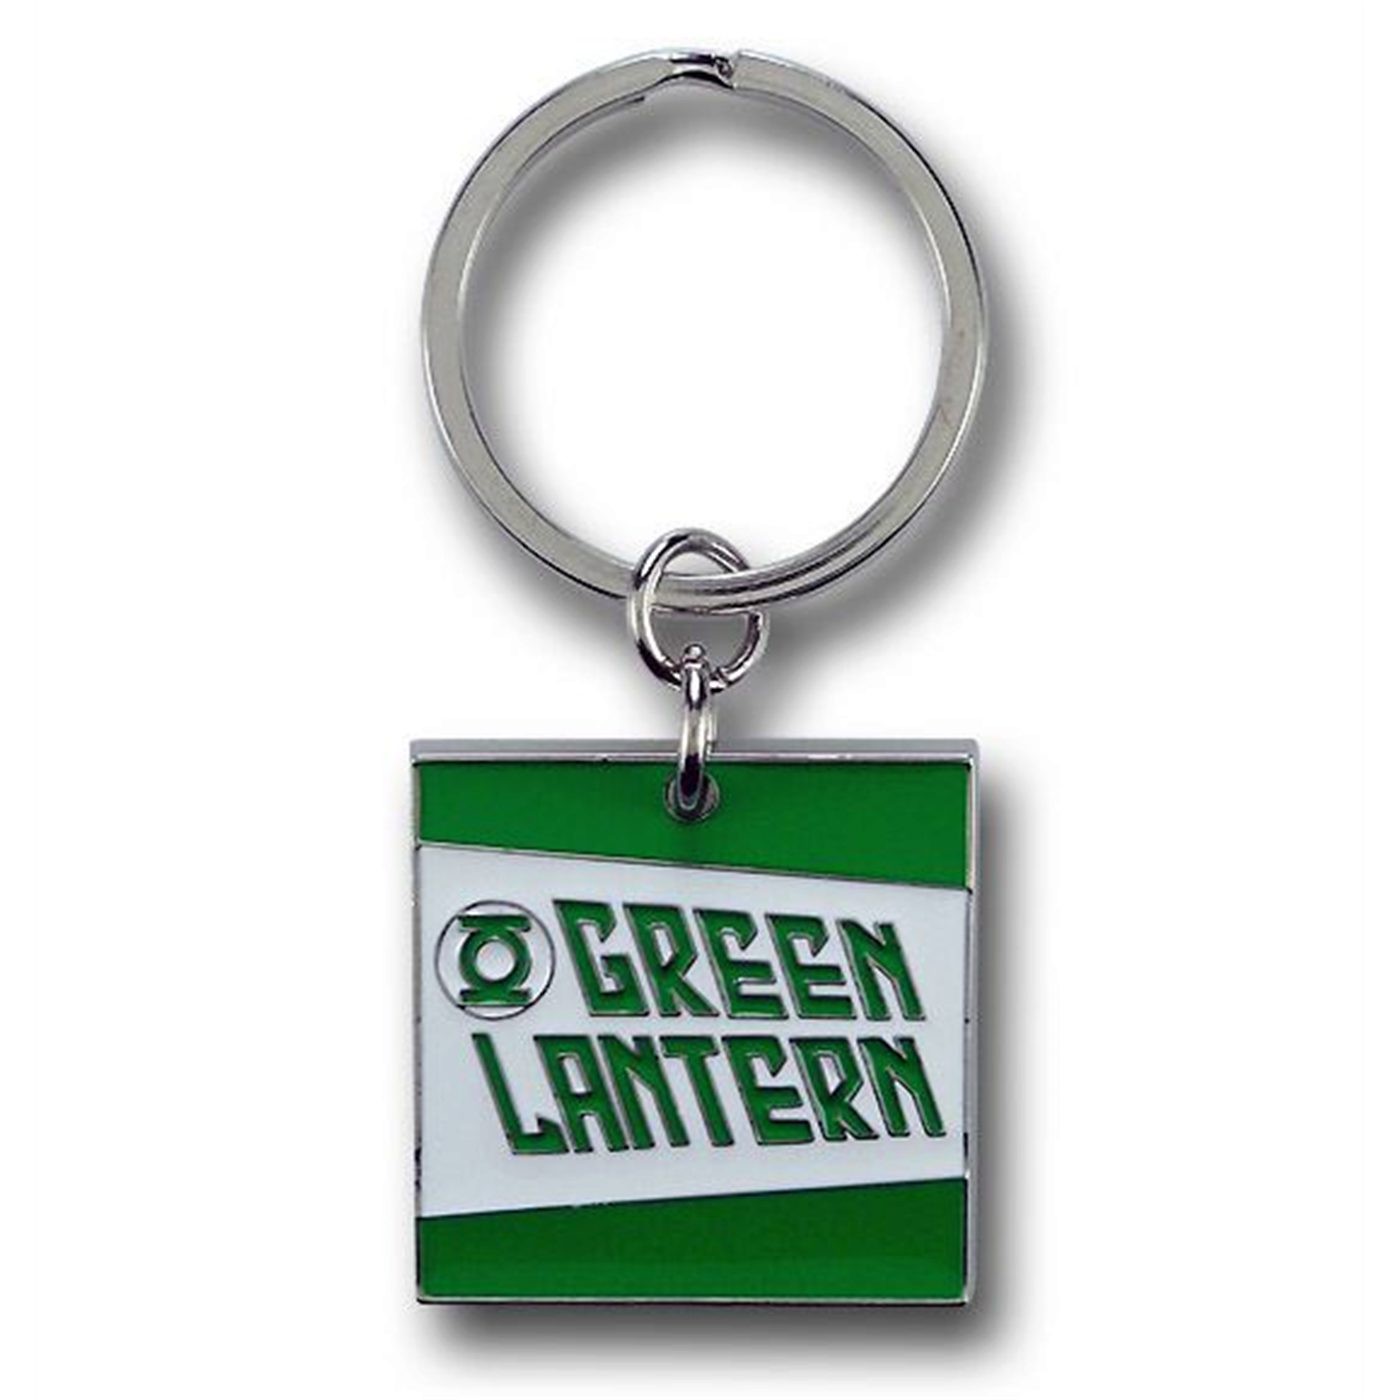 green lantern dc collectors box